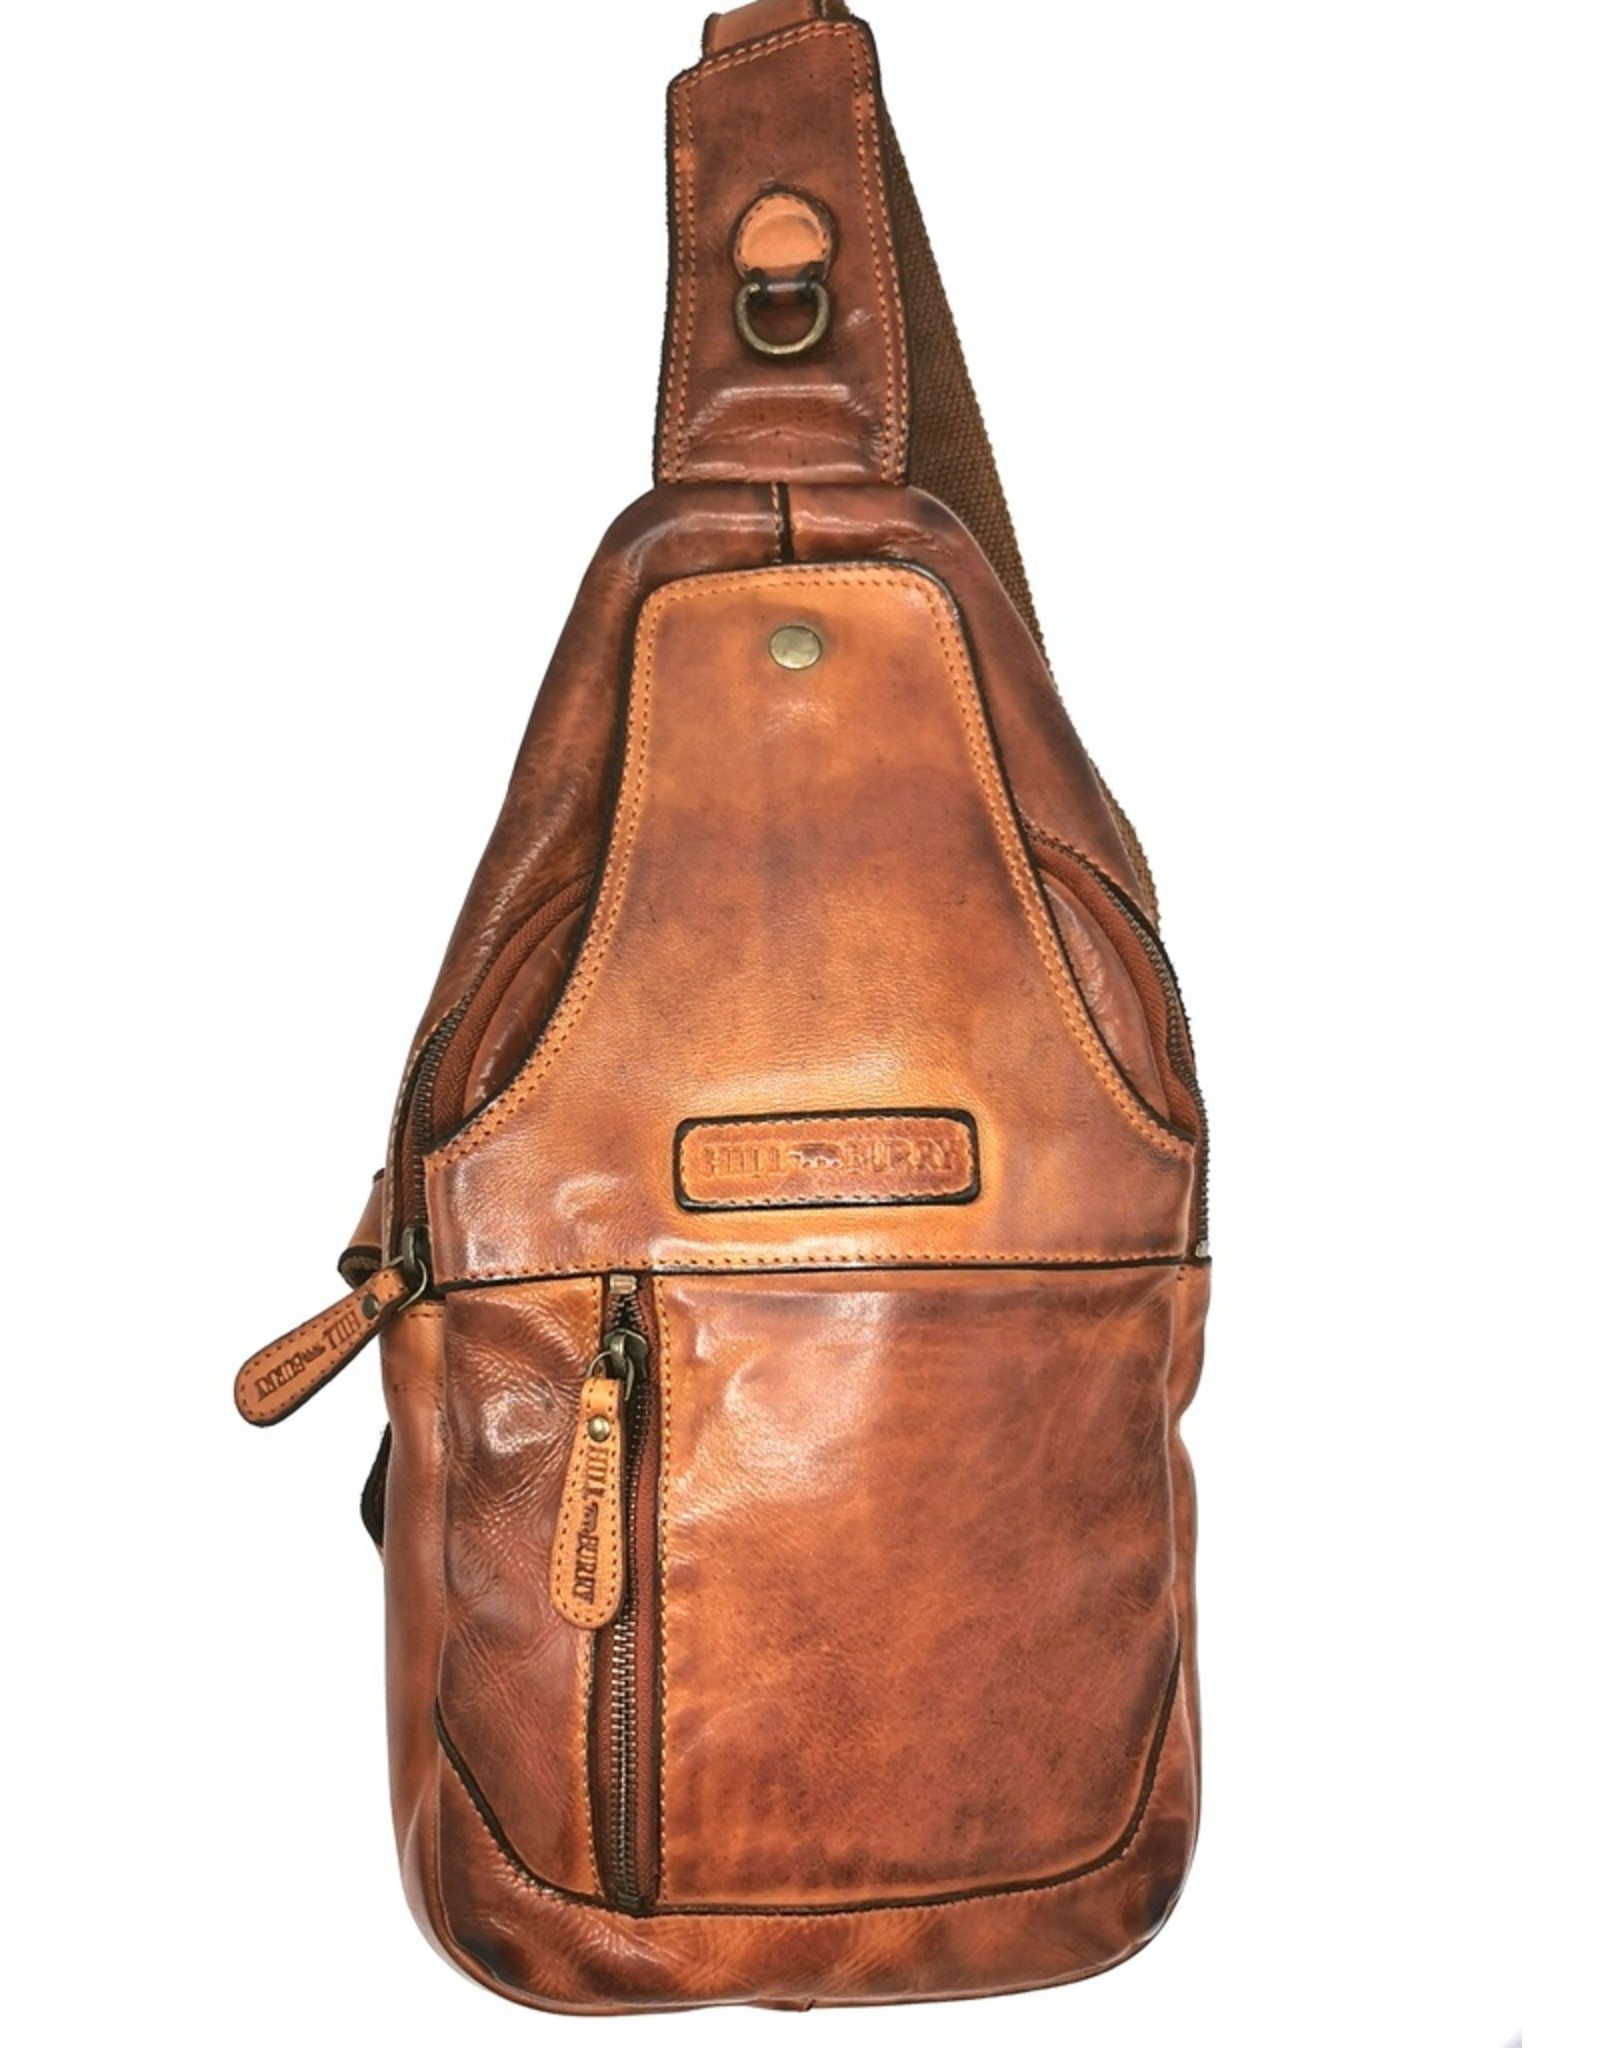 HillBurry Leather bags - Hillburry leather crossbody bag Sling bag cognac